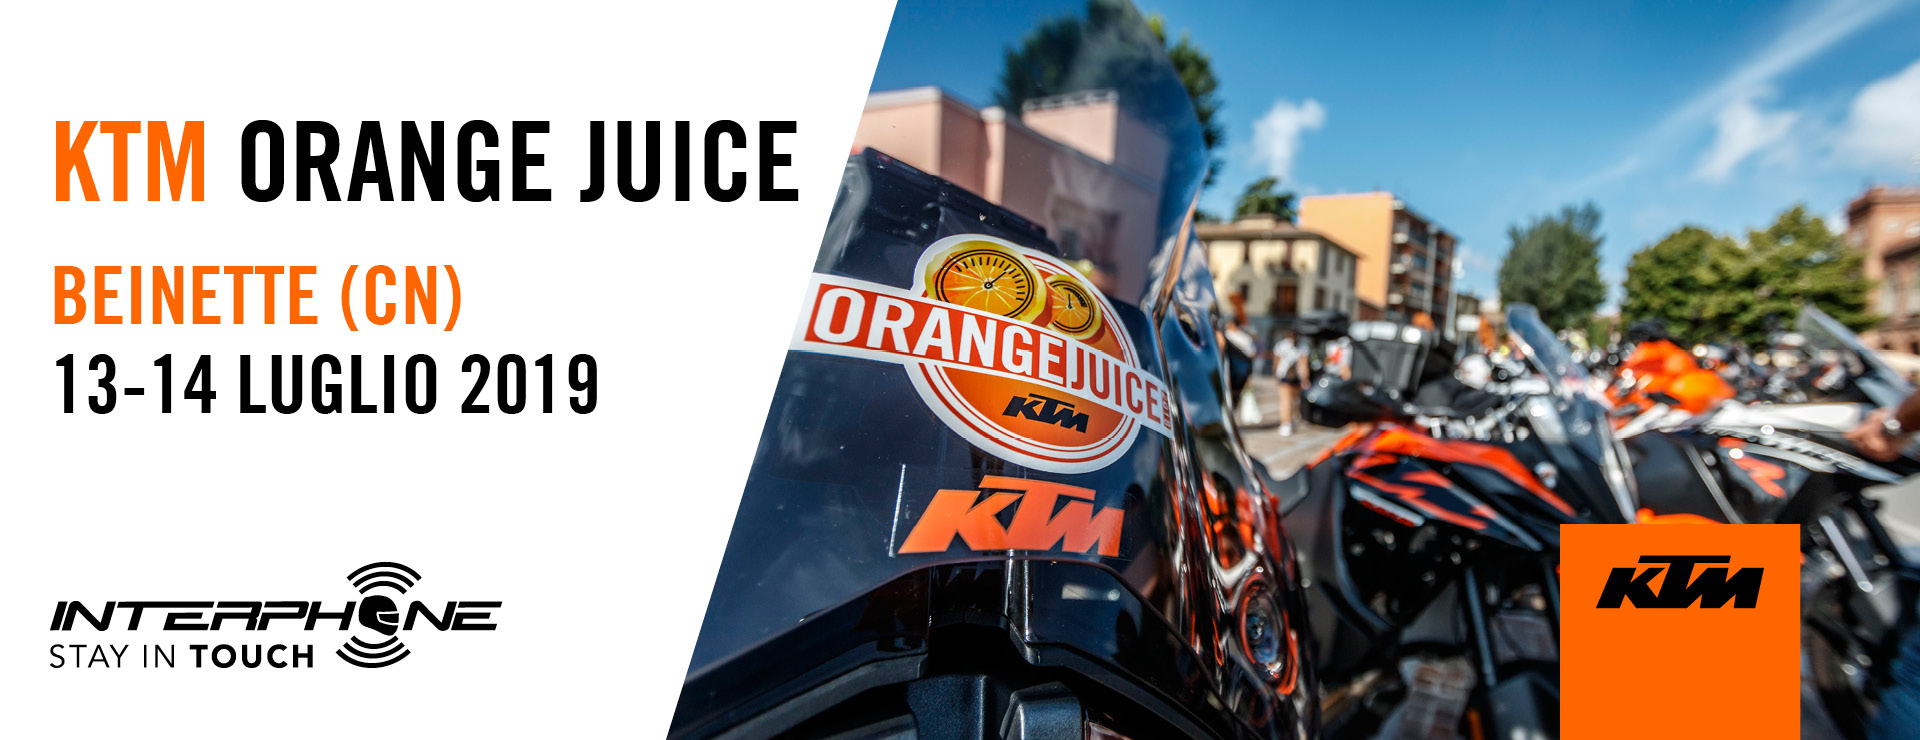 KTM Orange Juice Interphone [1920x740].jpg